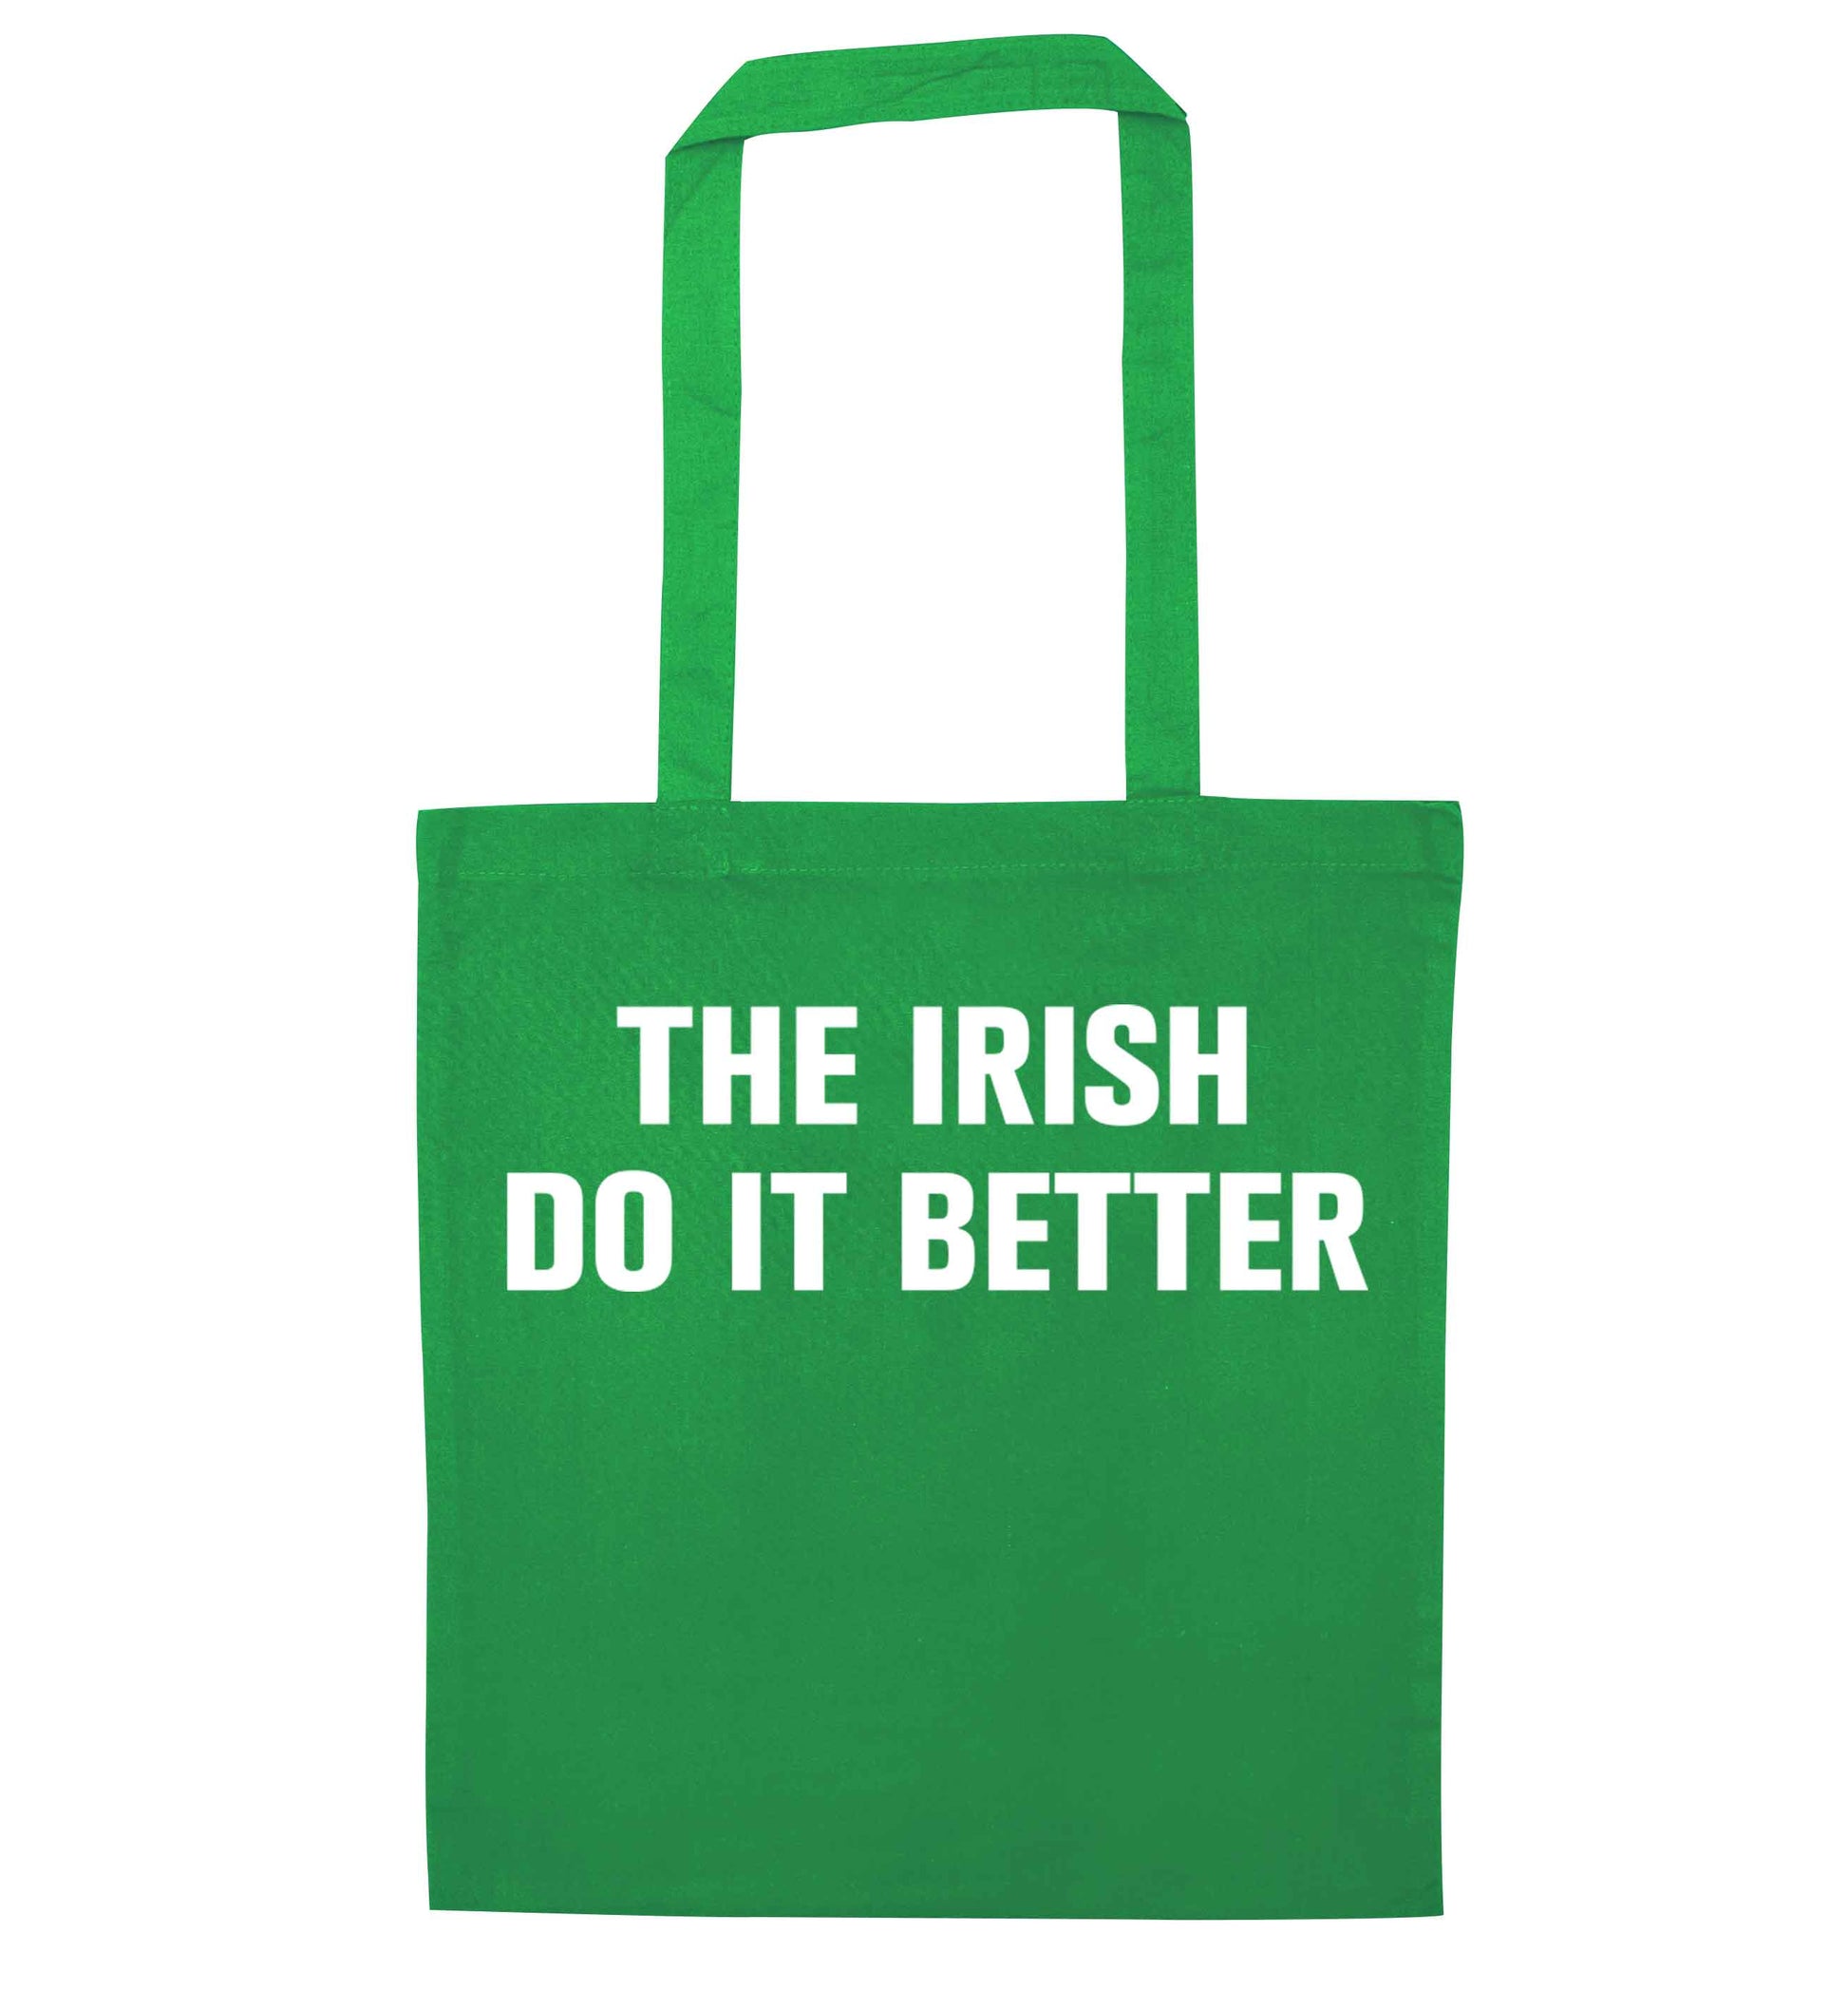 The Irish do it better green tote bag